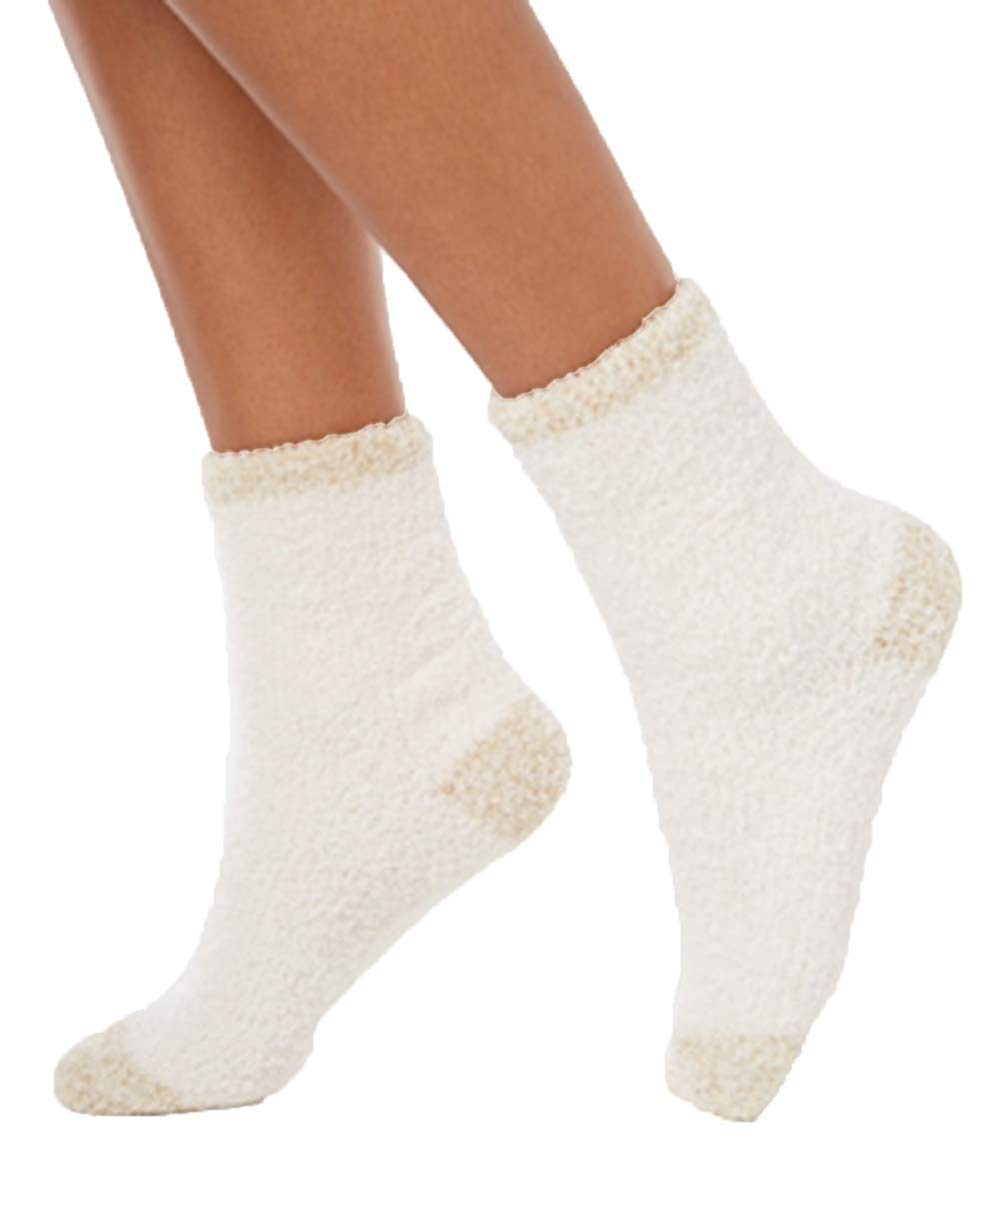 allbrand365 designer brand Womens Colorblocked Fuzzy Cozy Socks